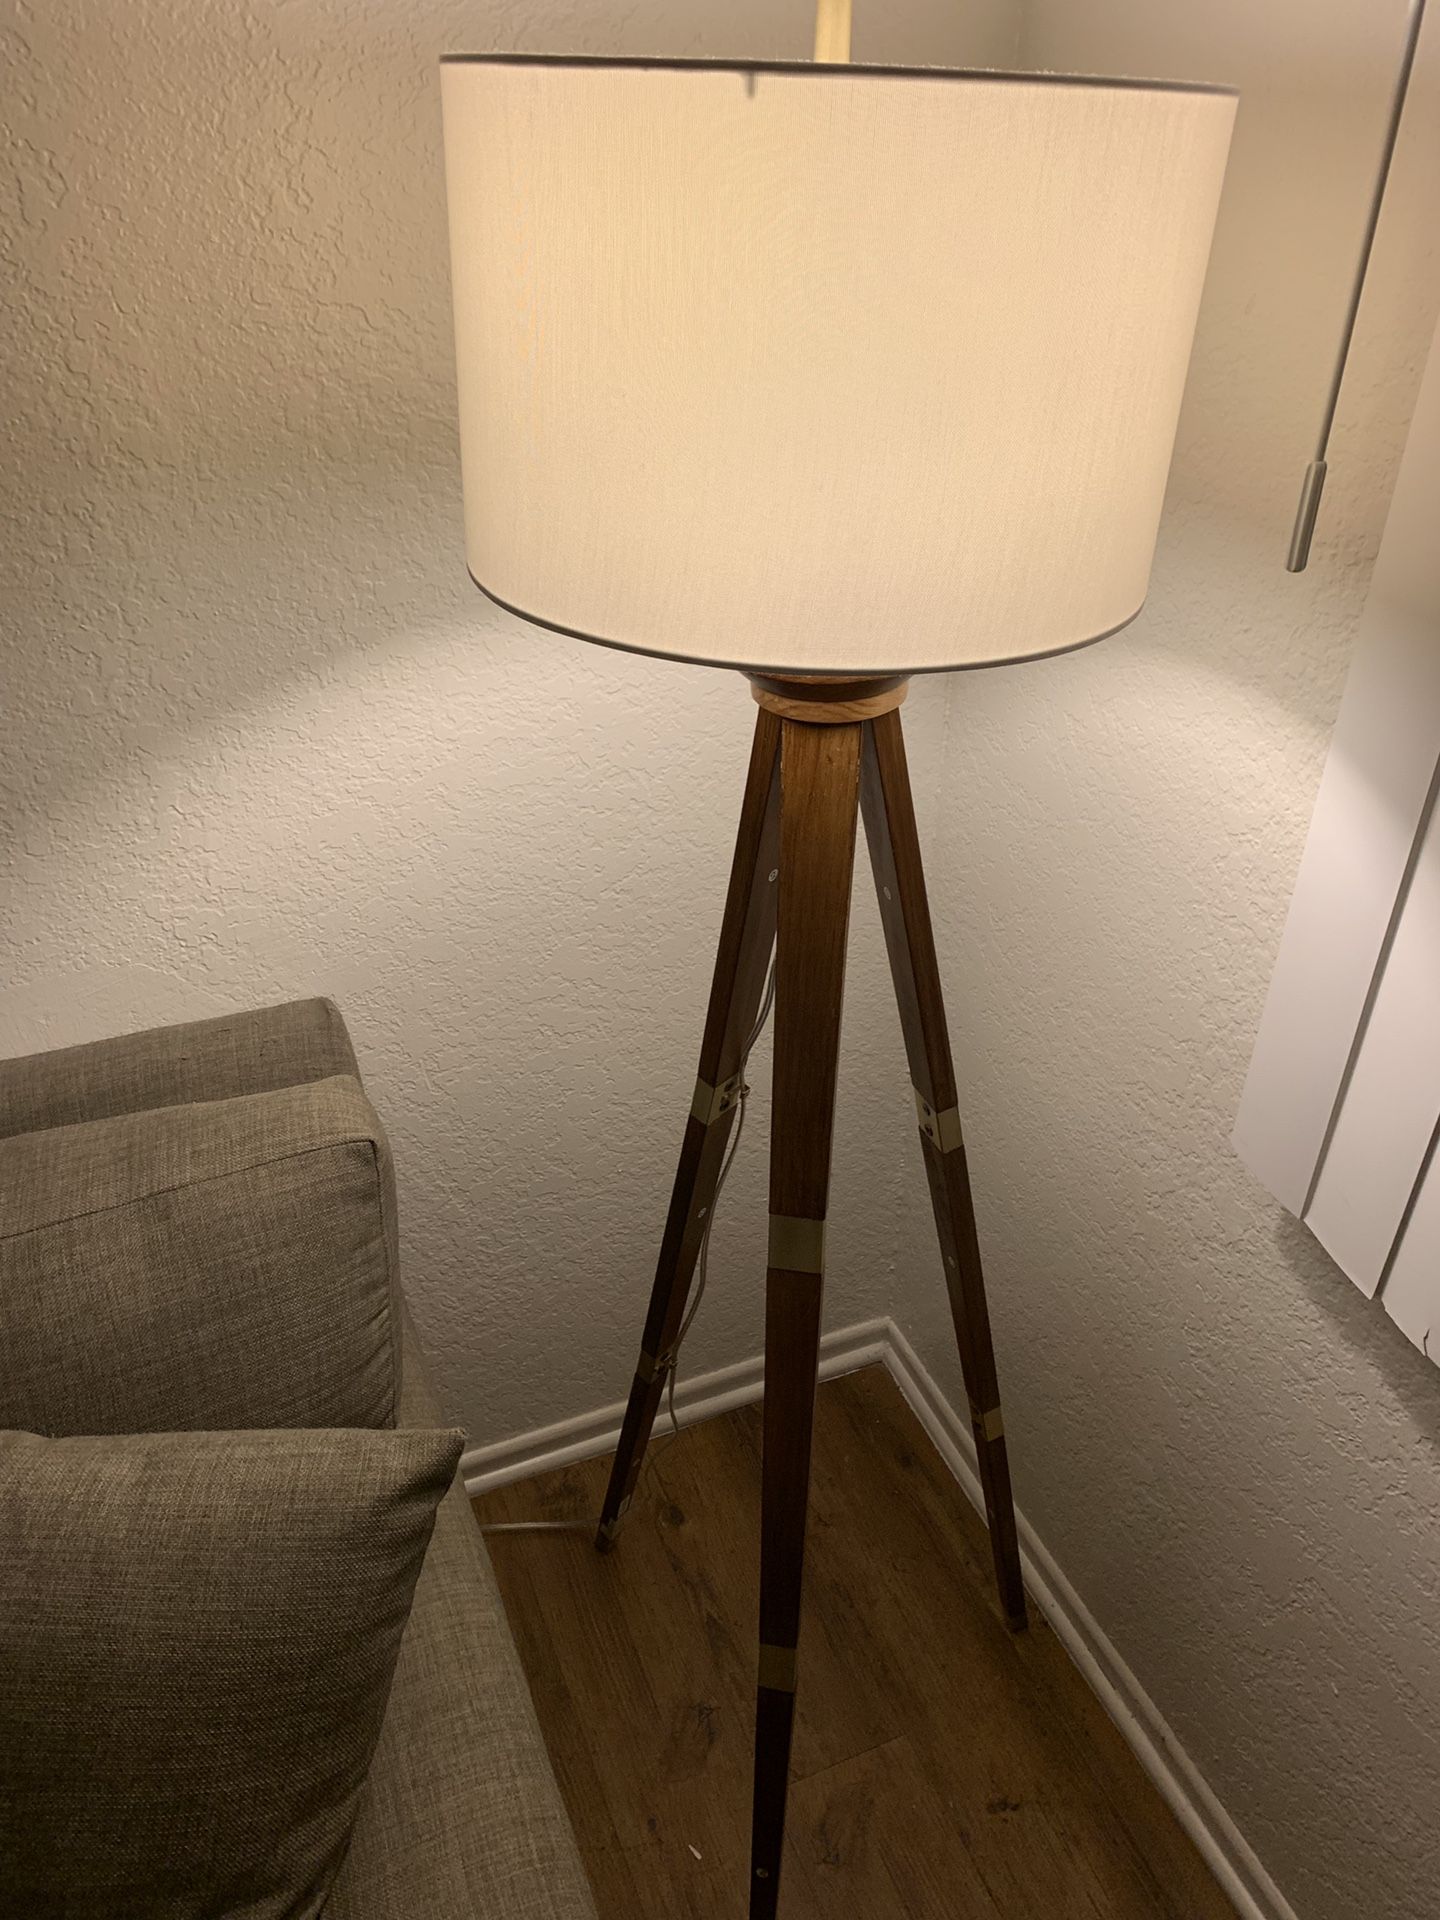 Threshold floor lamp